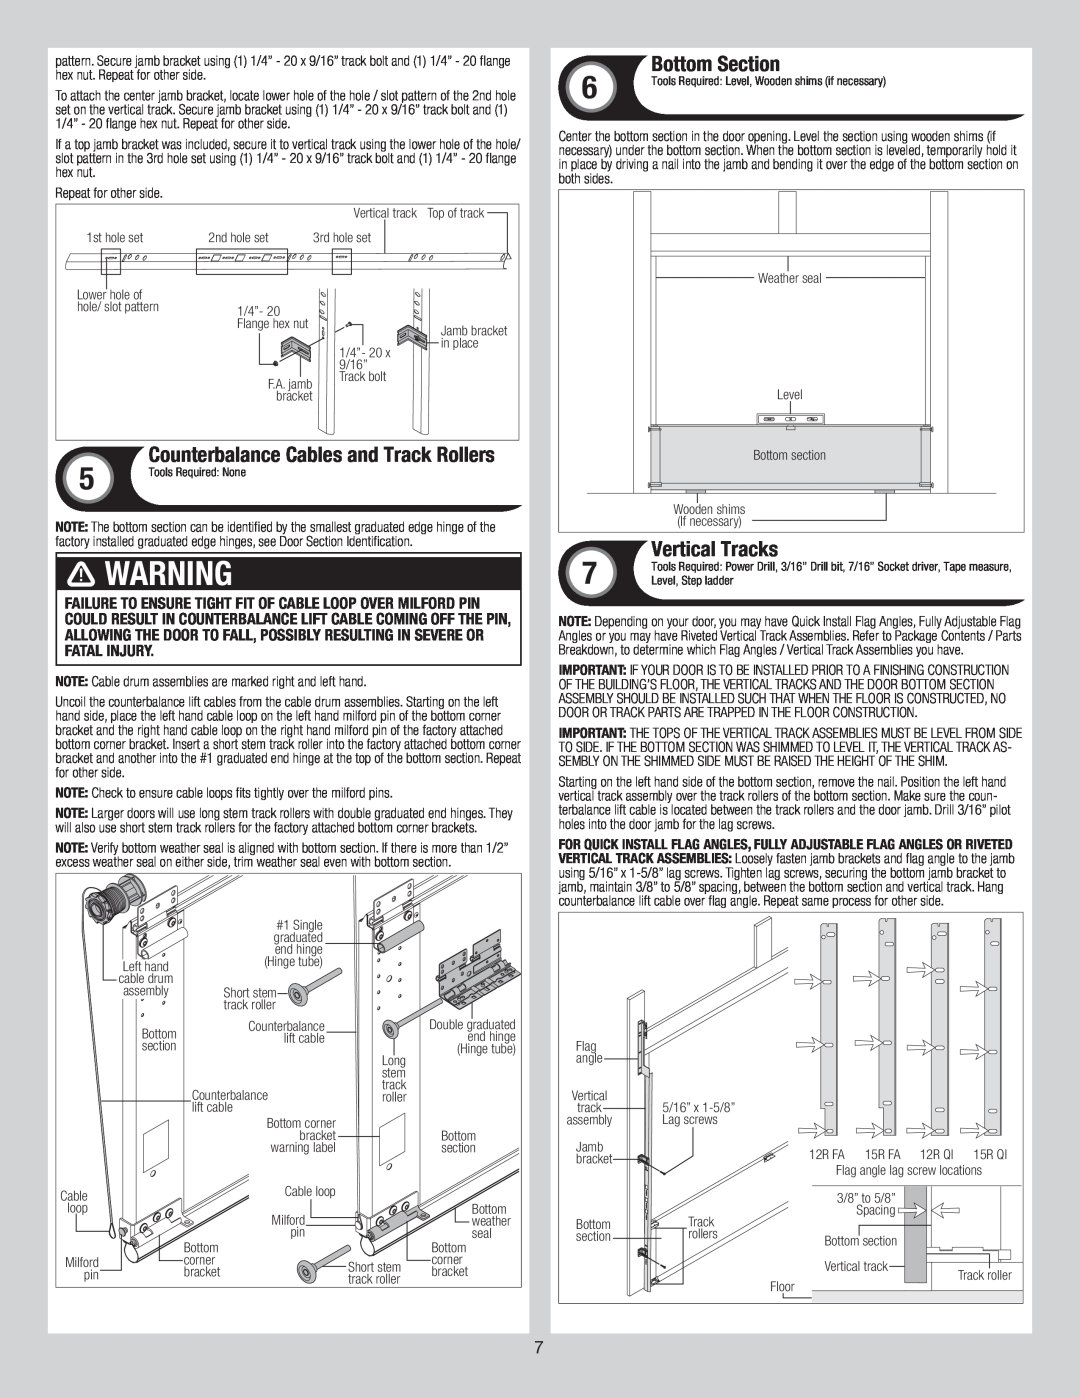 Wayne-Dalton 9800 Bottom Section, Vertical Tracks, Counterbalance Cables and Track Rollers, WarningARNING 